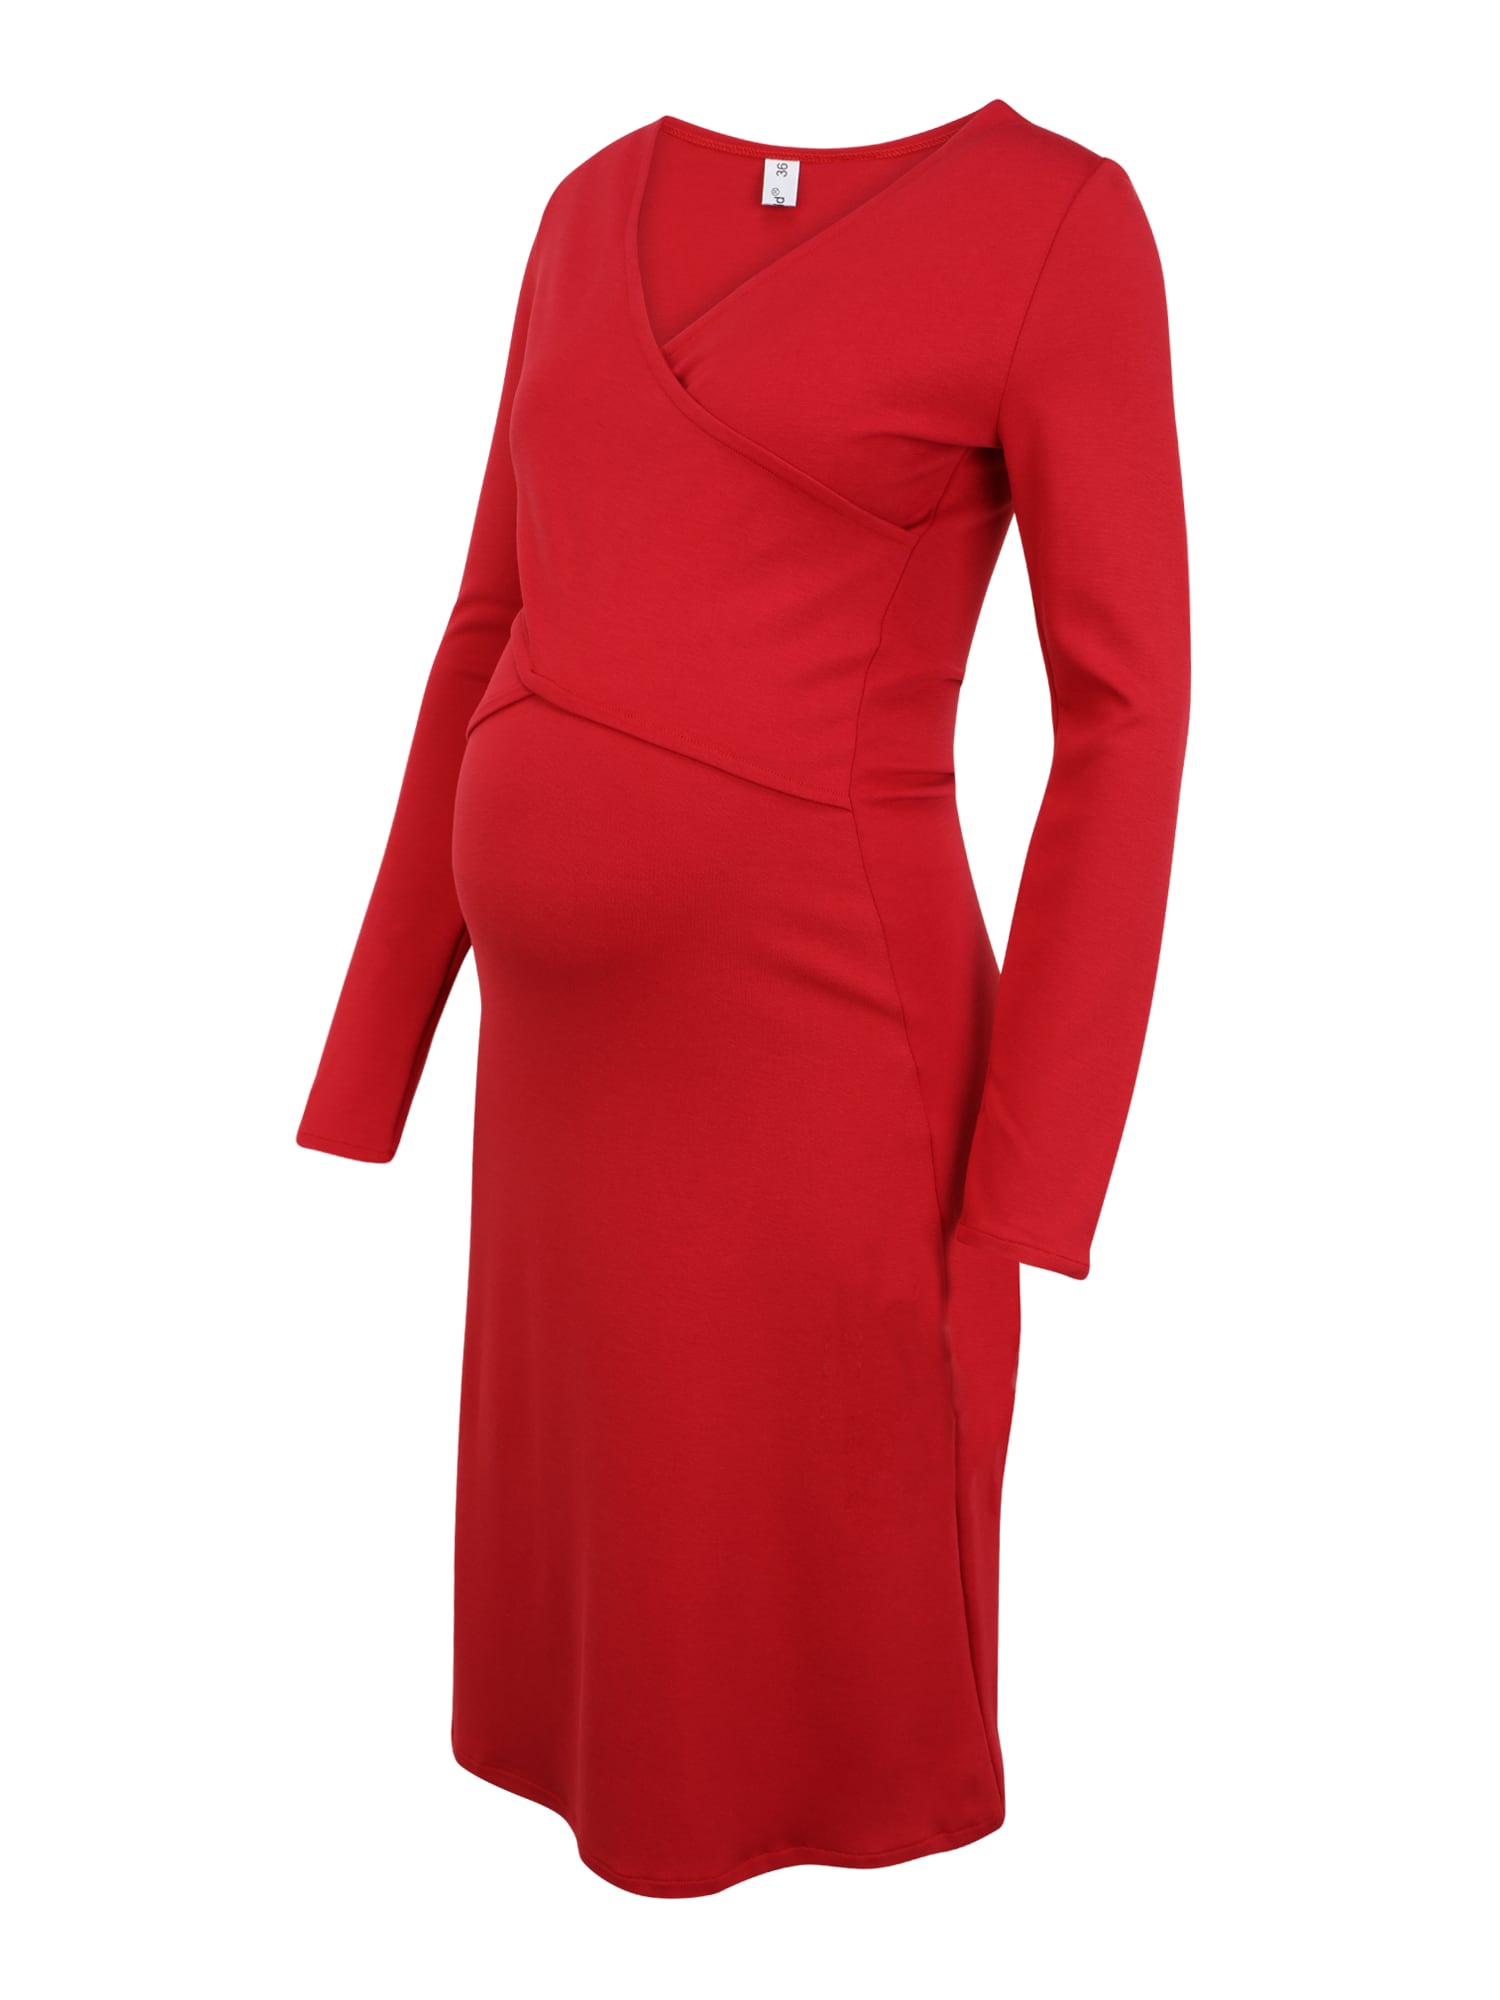 Šaty Paola červená Bebefield